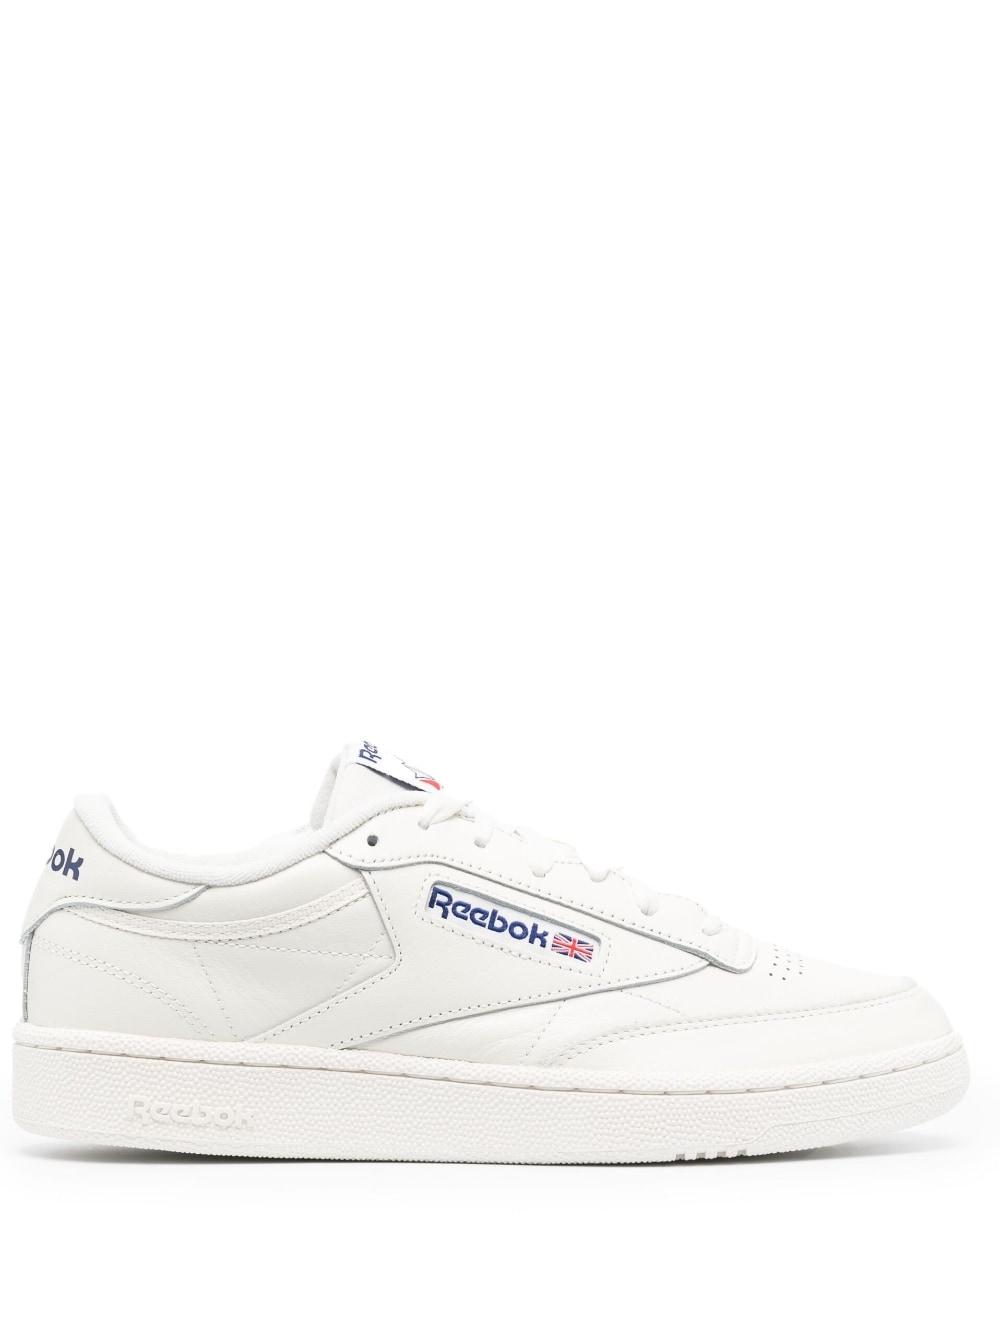 Reebok Club C 85 Low-top Sneakers in White for Men | Lyst